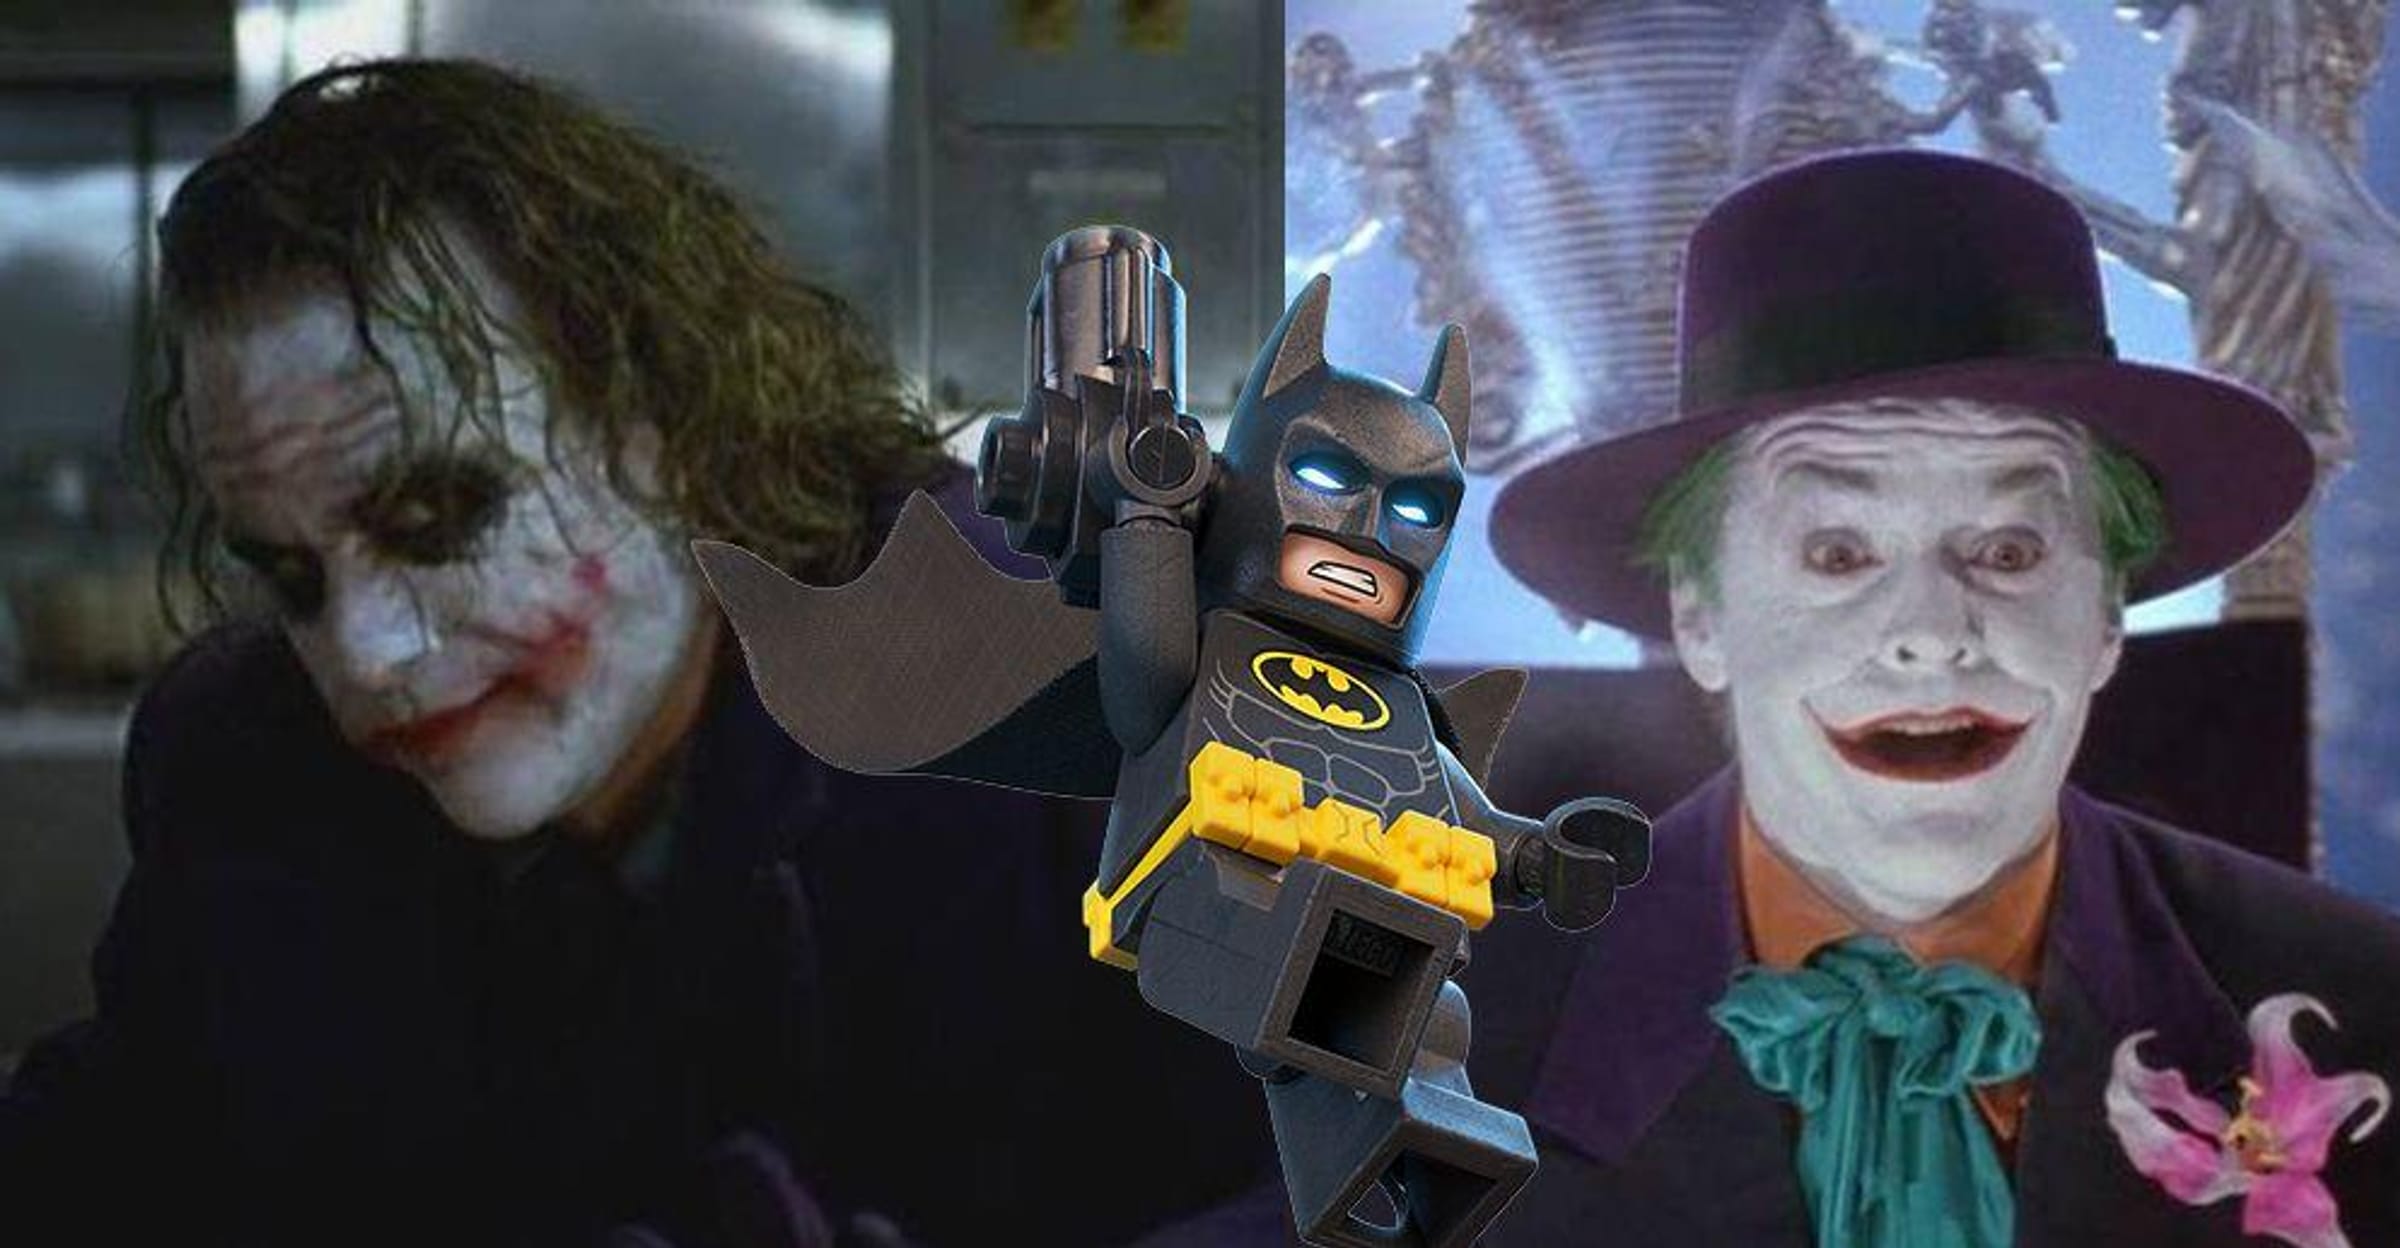 The LEGO Batman Movie: Watch creators reveal inspiration behind